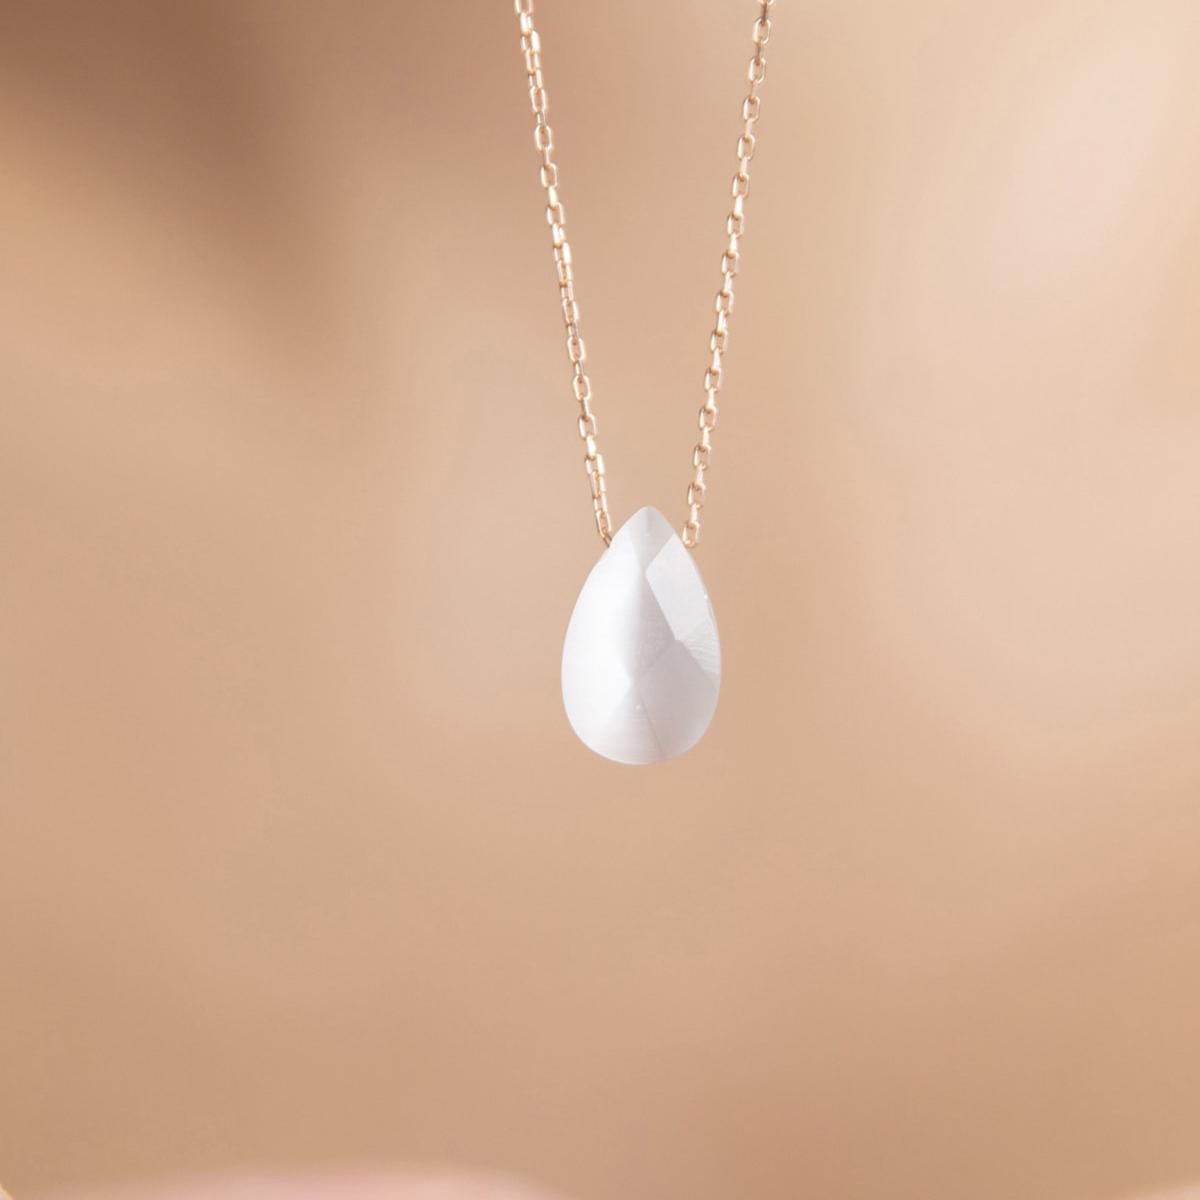 White Diamond Drop Pendant Necklace • White Opal Teardrop Necklace - Trending Silver Gifts